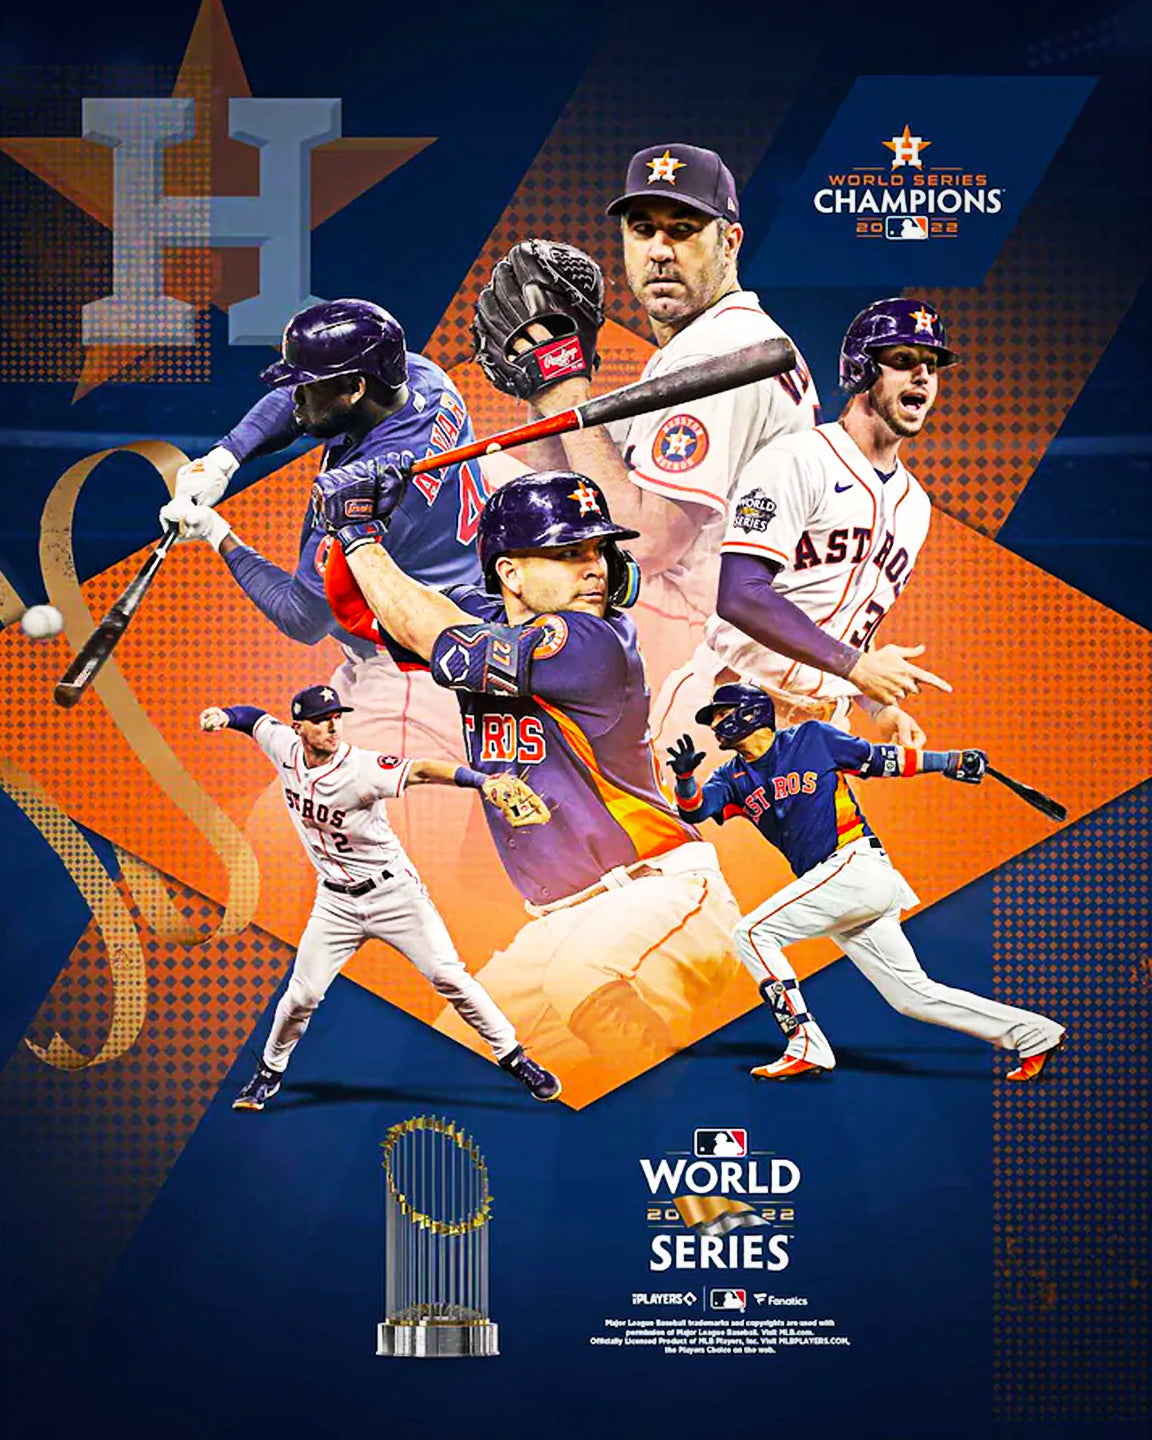 Houston Astros on X: The Houston Astros are 2022 World Champions! 🏆   / X